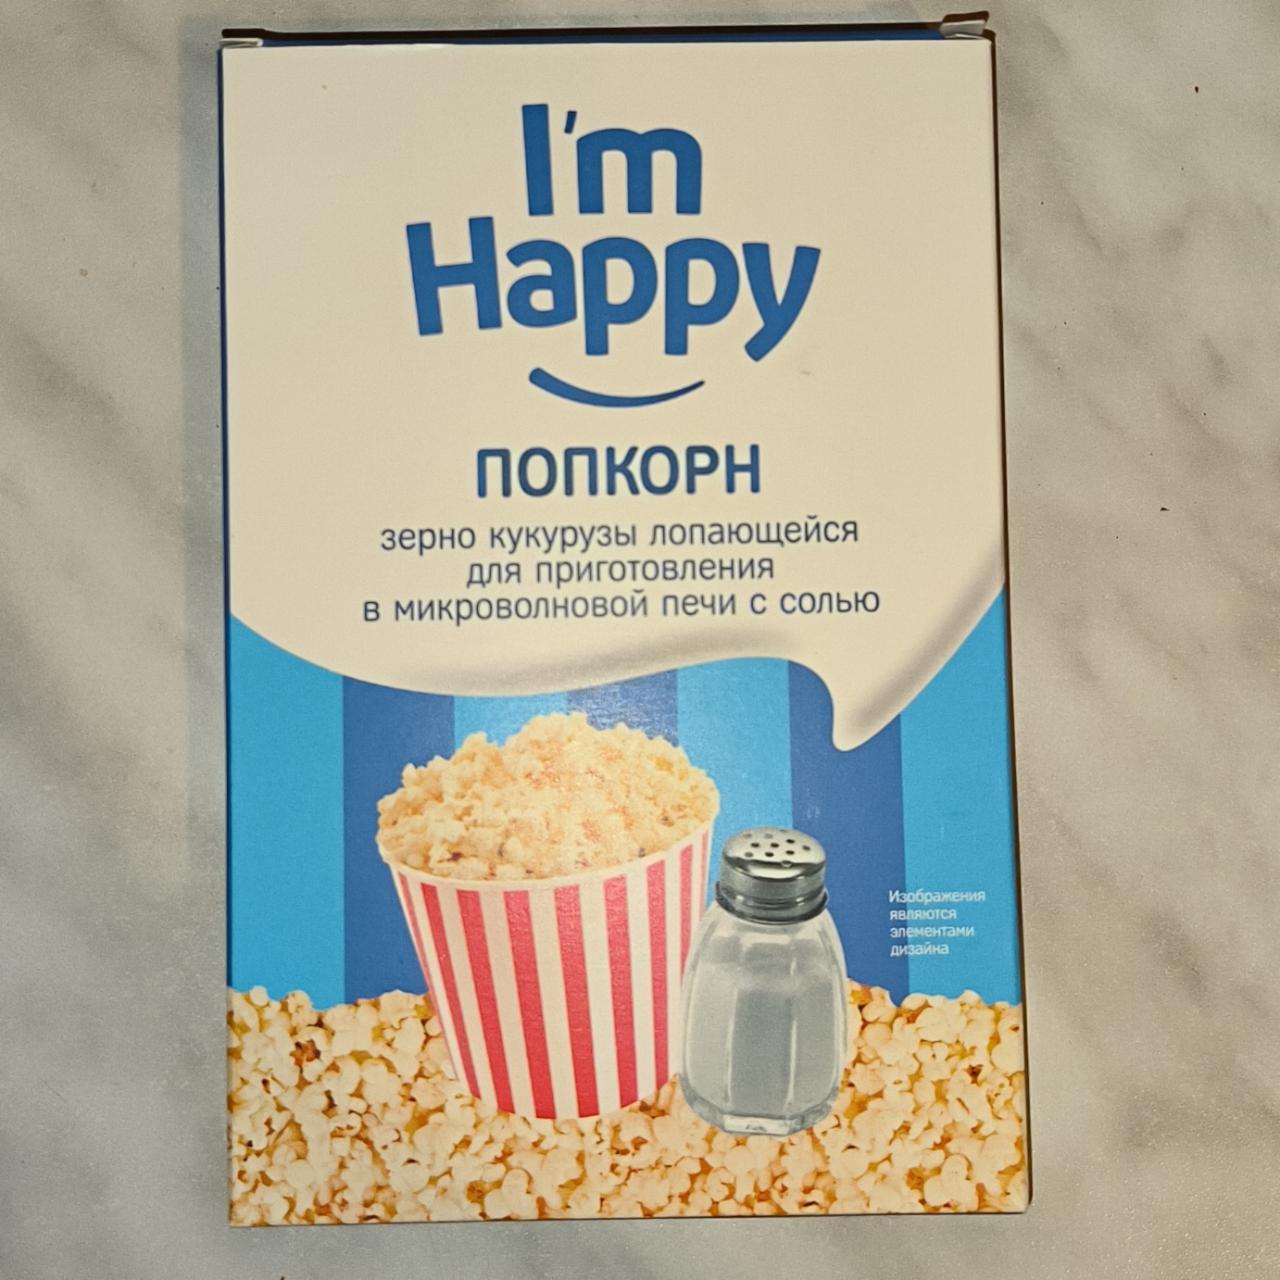 Фото - Попкорн с солью I'm happy